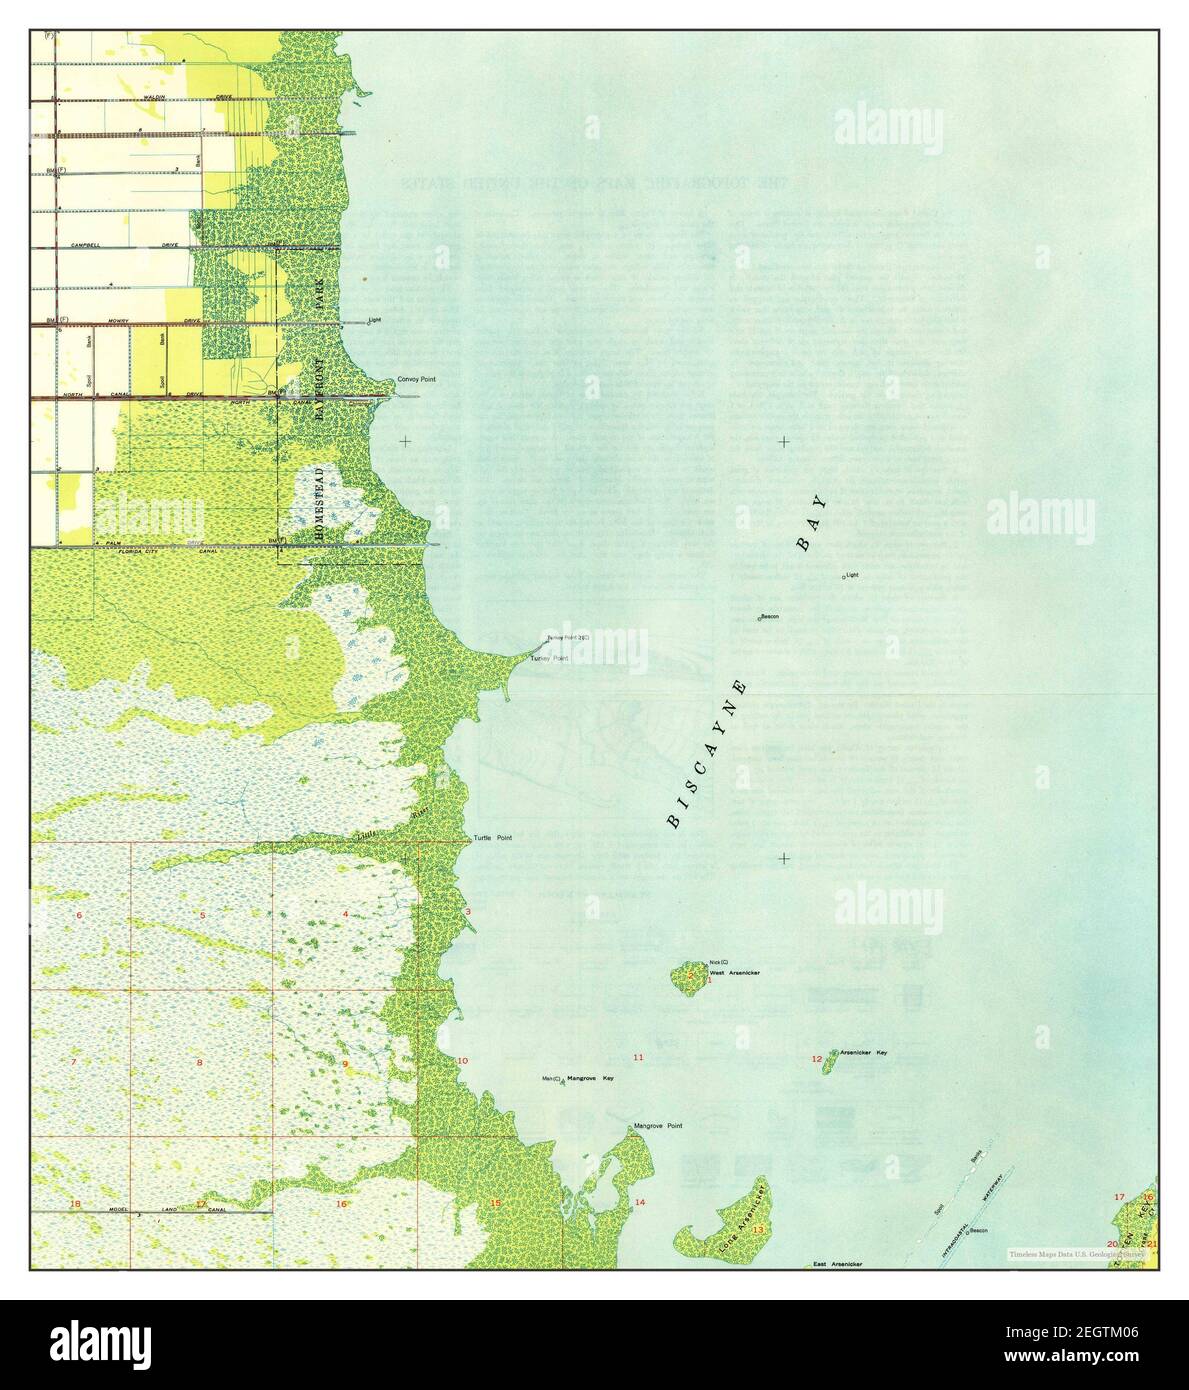 Arsenicker Keys, Florida, map 1949, 1:24000, United States of America by Timeless Maps, data U.S. Geological Survey Stock Photo